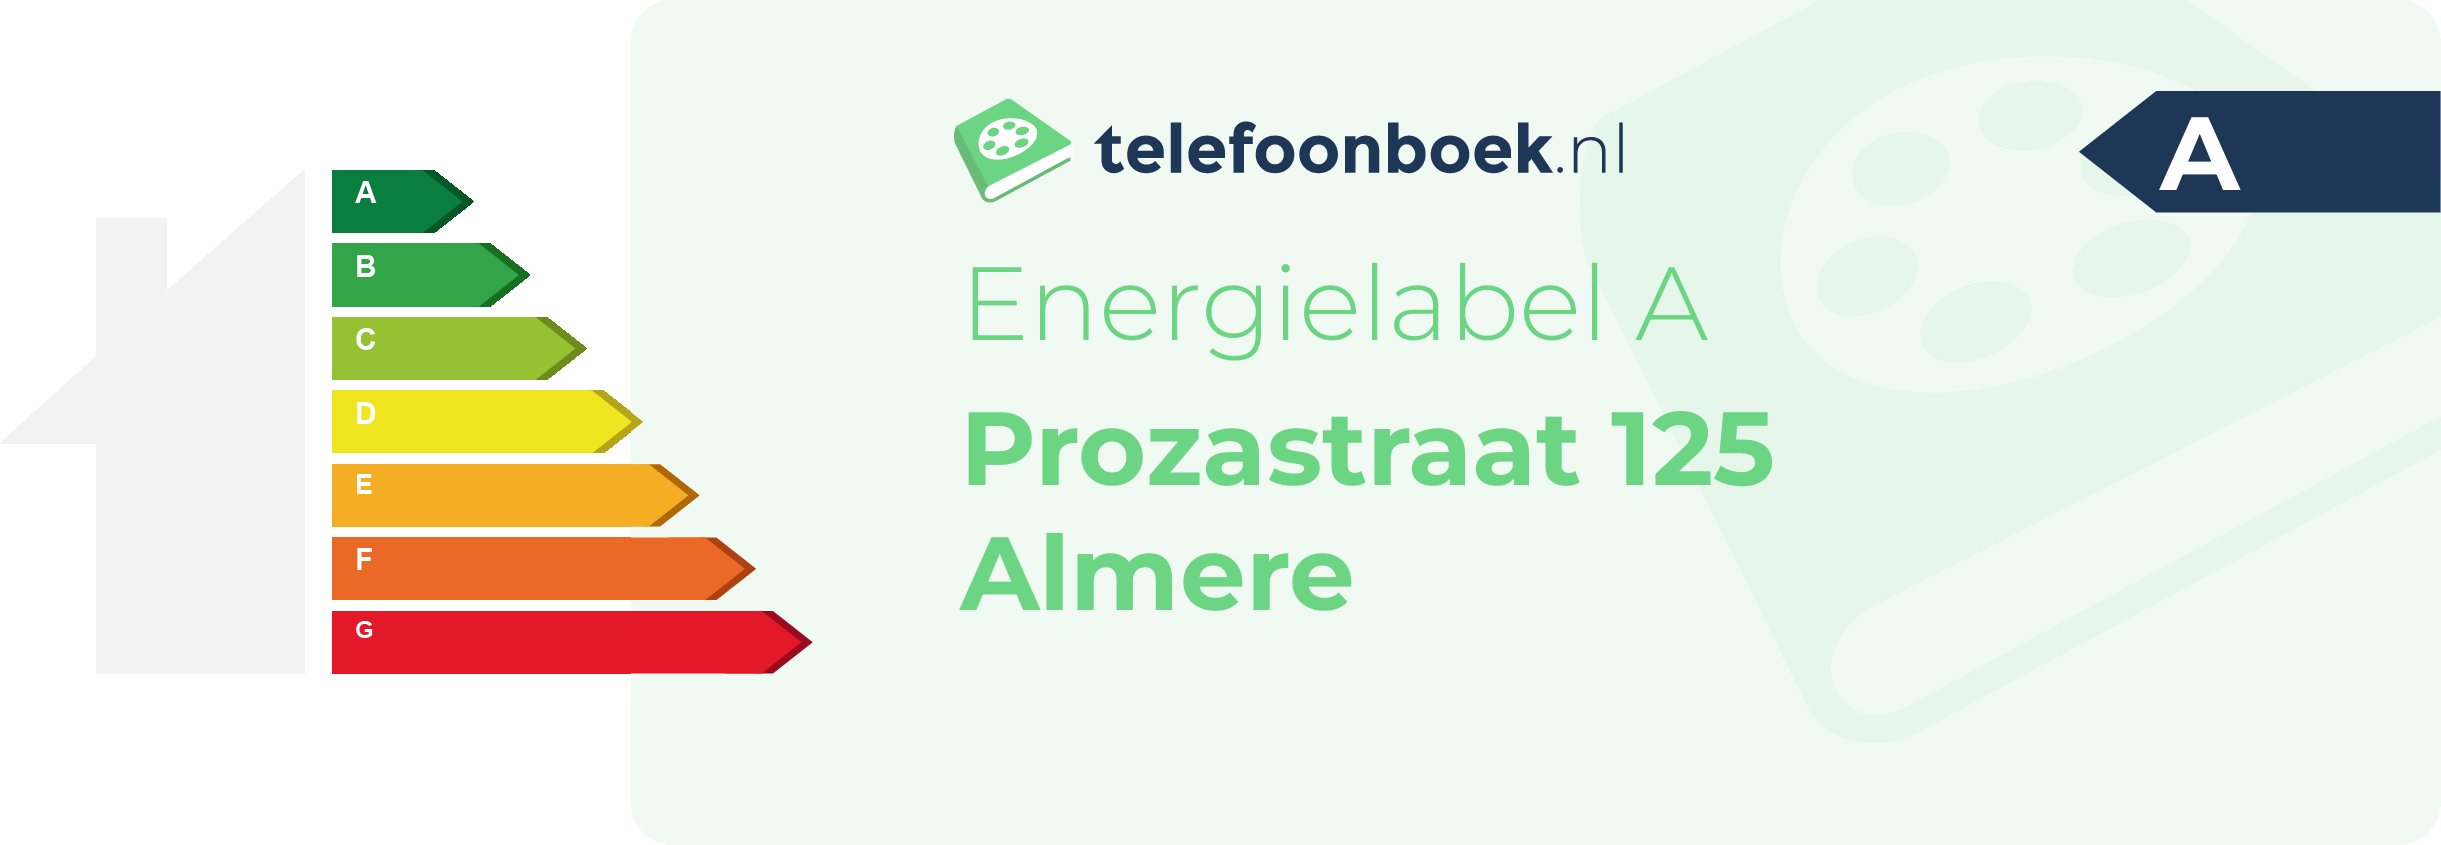 Energielabel Prozastraat 125 Almere